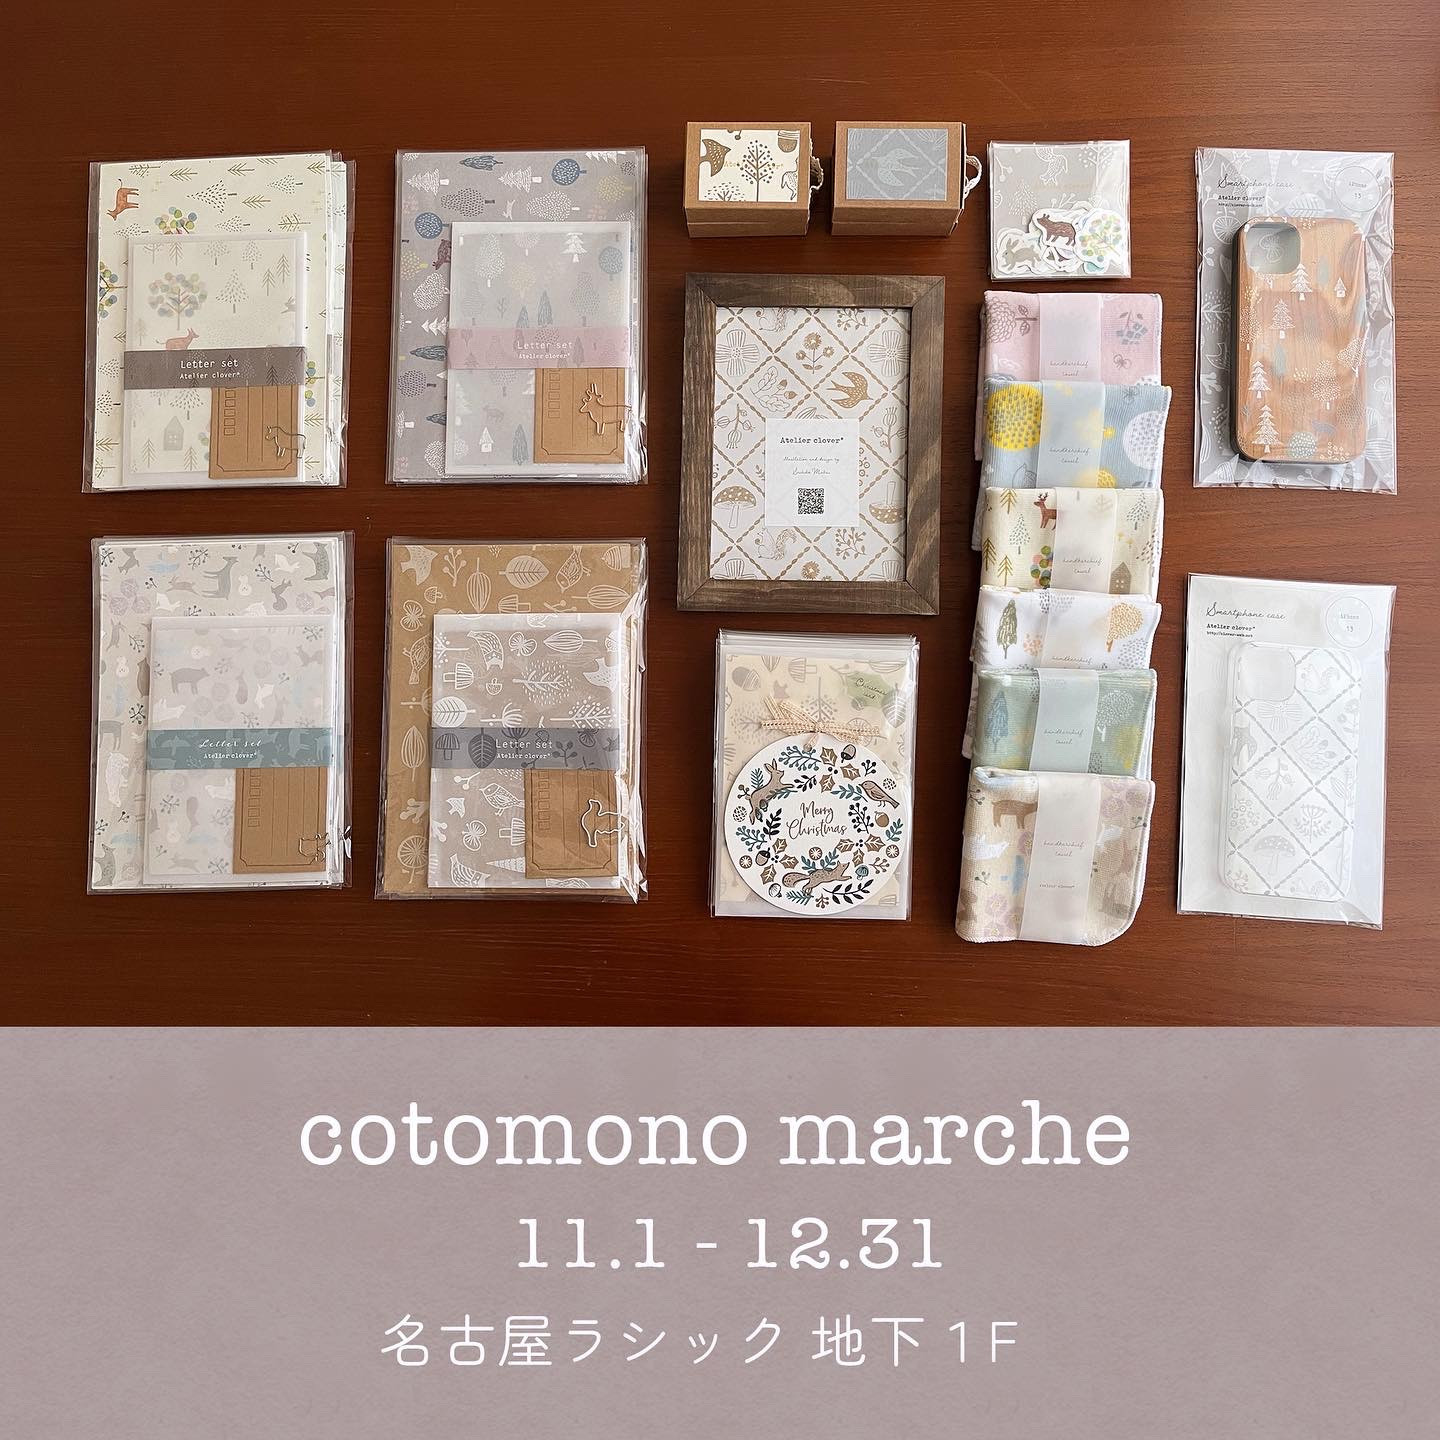 cotomono marche コトモノマルシェ ・ 名古屋ラシック店 期間限定shop